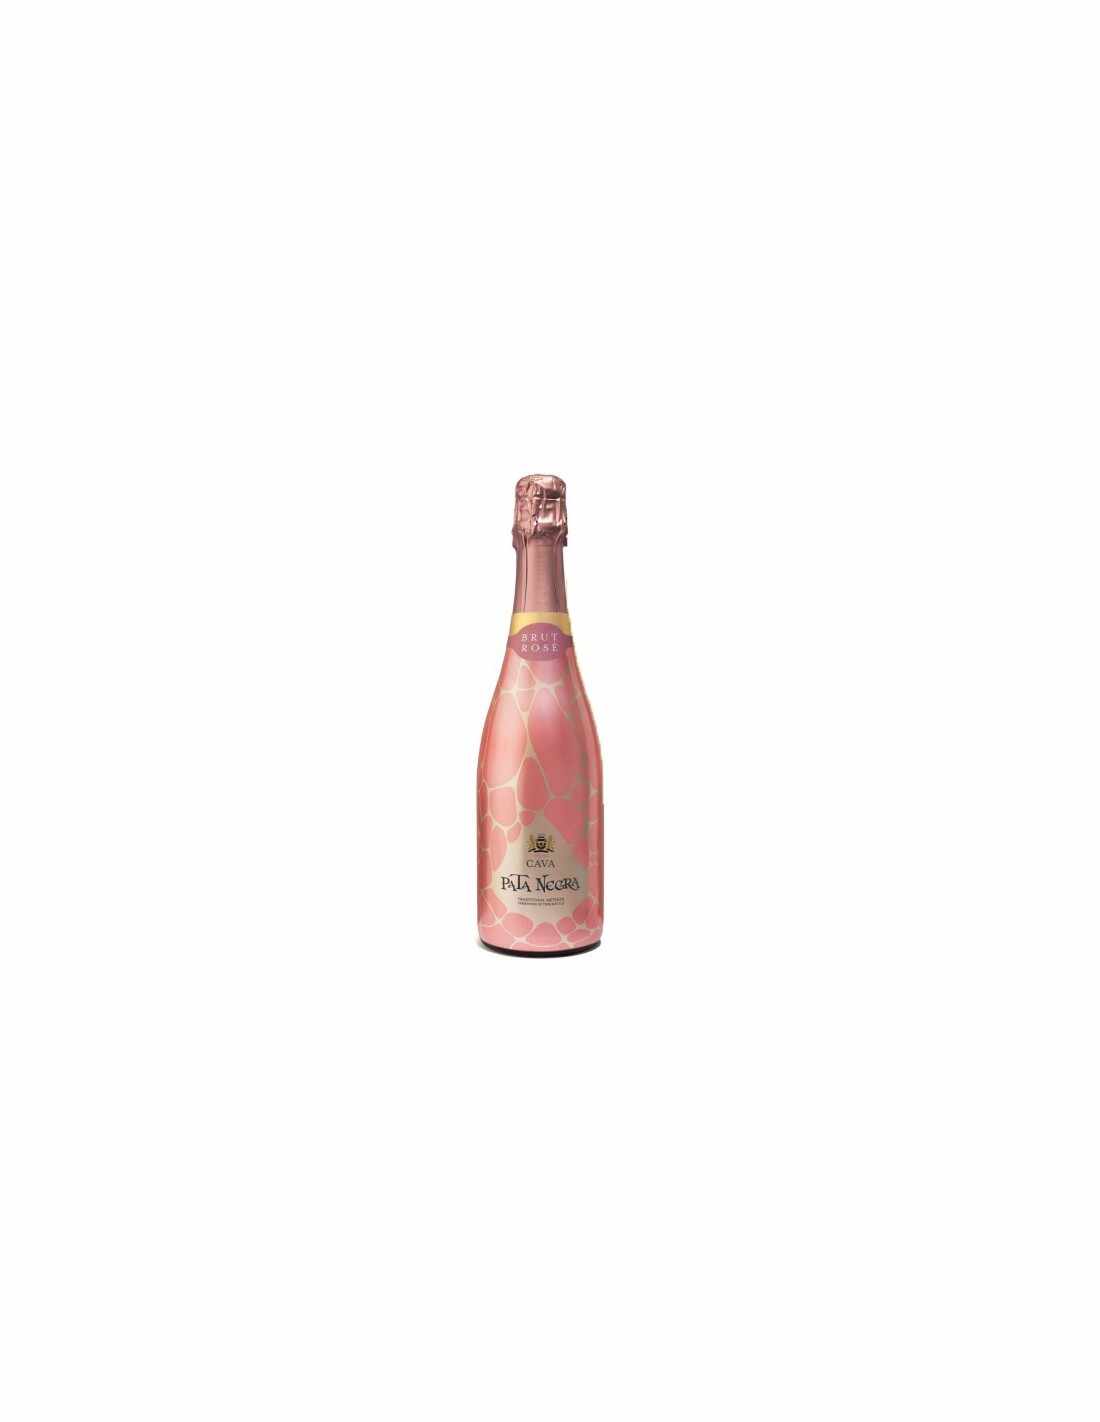 Vin spumant roze Pinot Noir, Pata Negra Cava, 0.75L, 11.5% alc., Spania